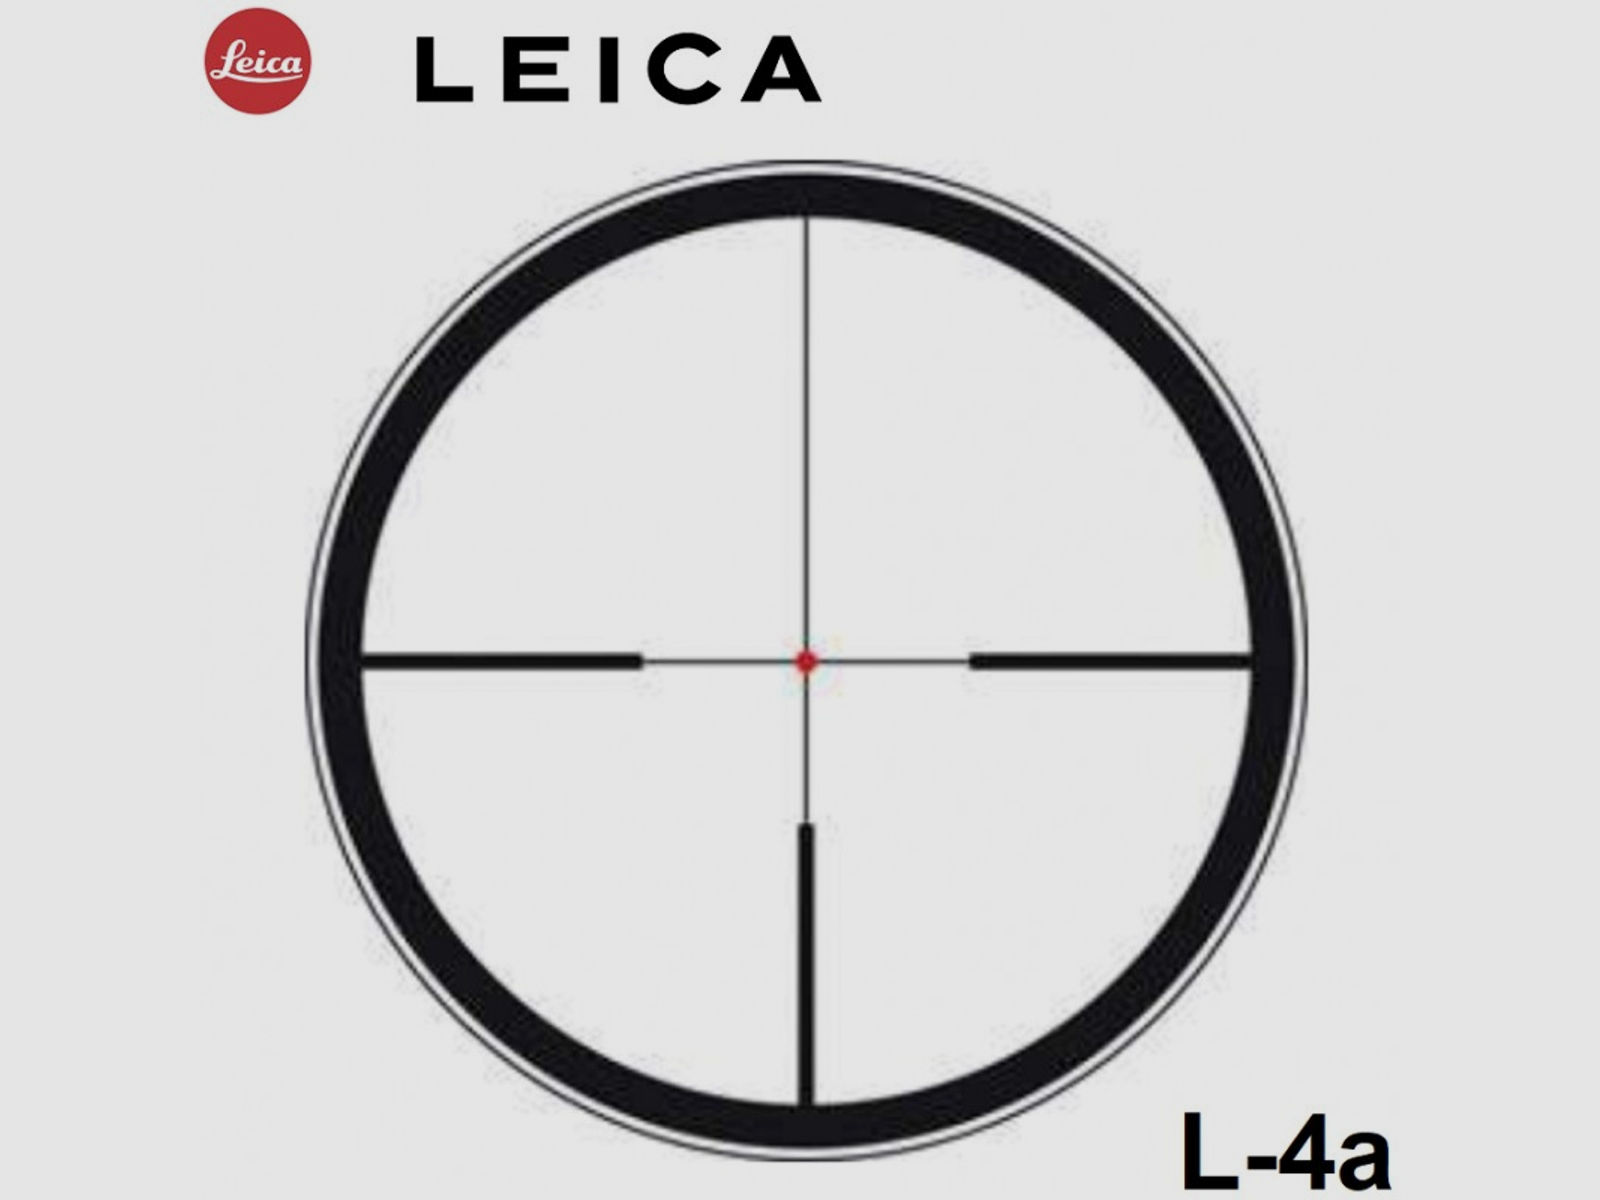 Leica Magnus 1,5-10x42 i, L-4a